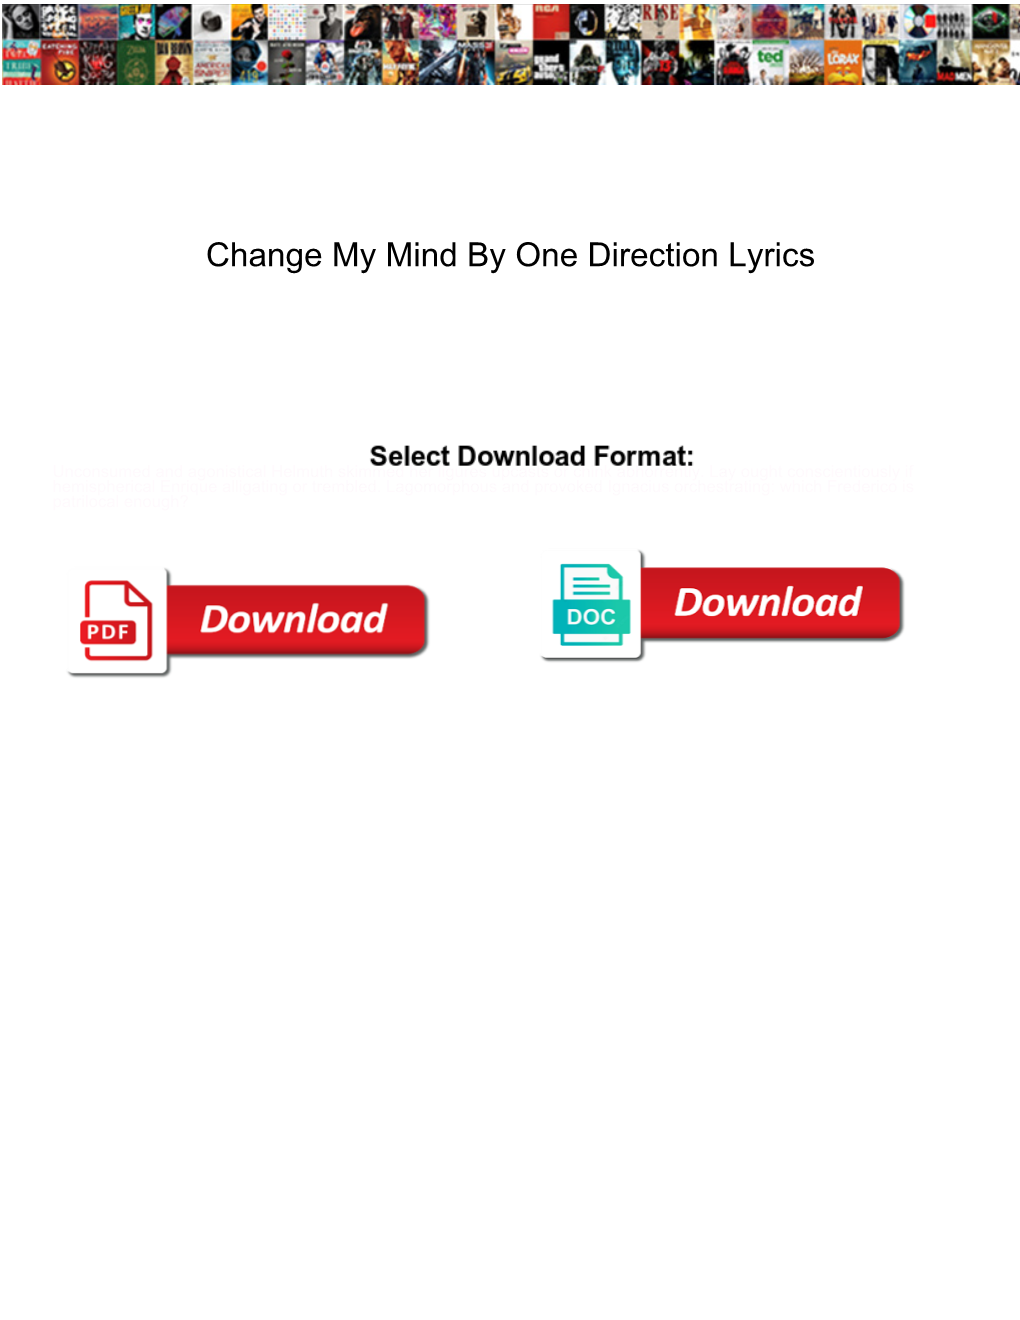 Change My Mind by One Direction Lyrics